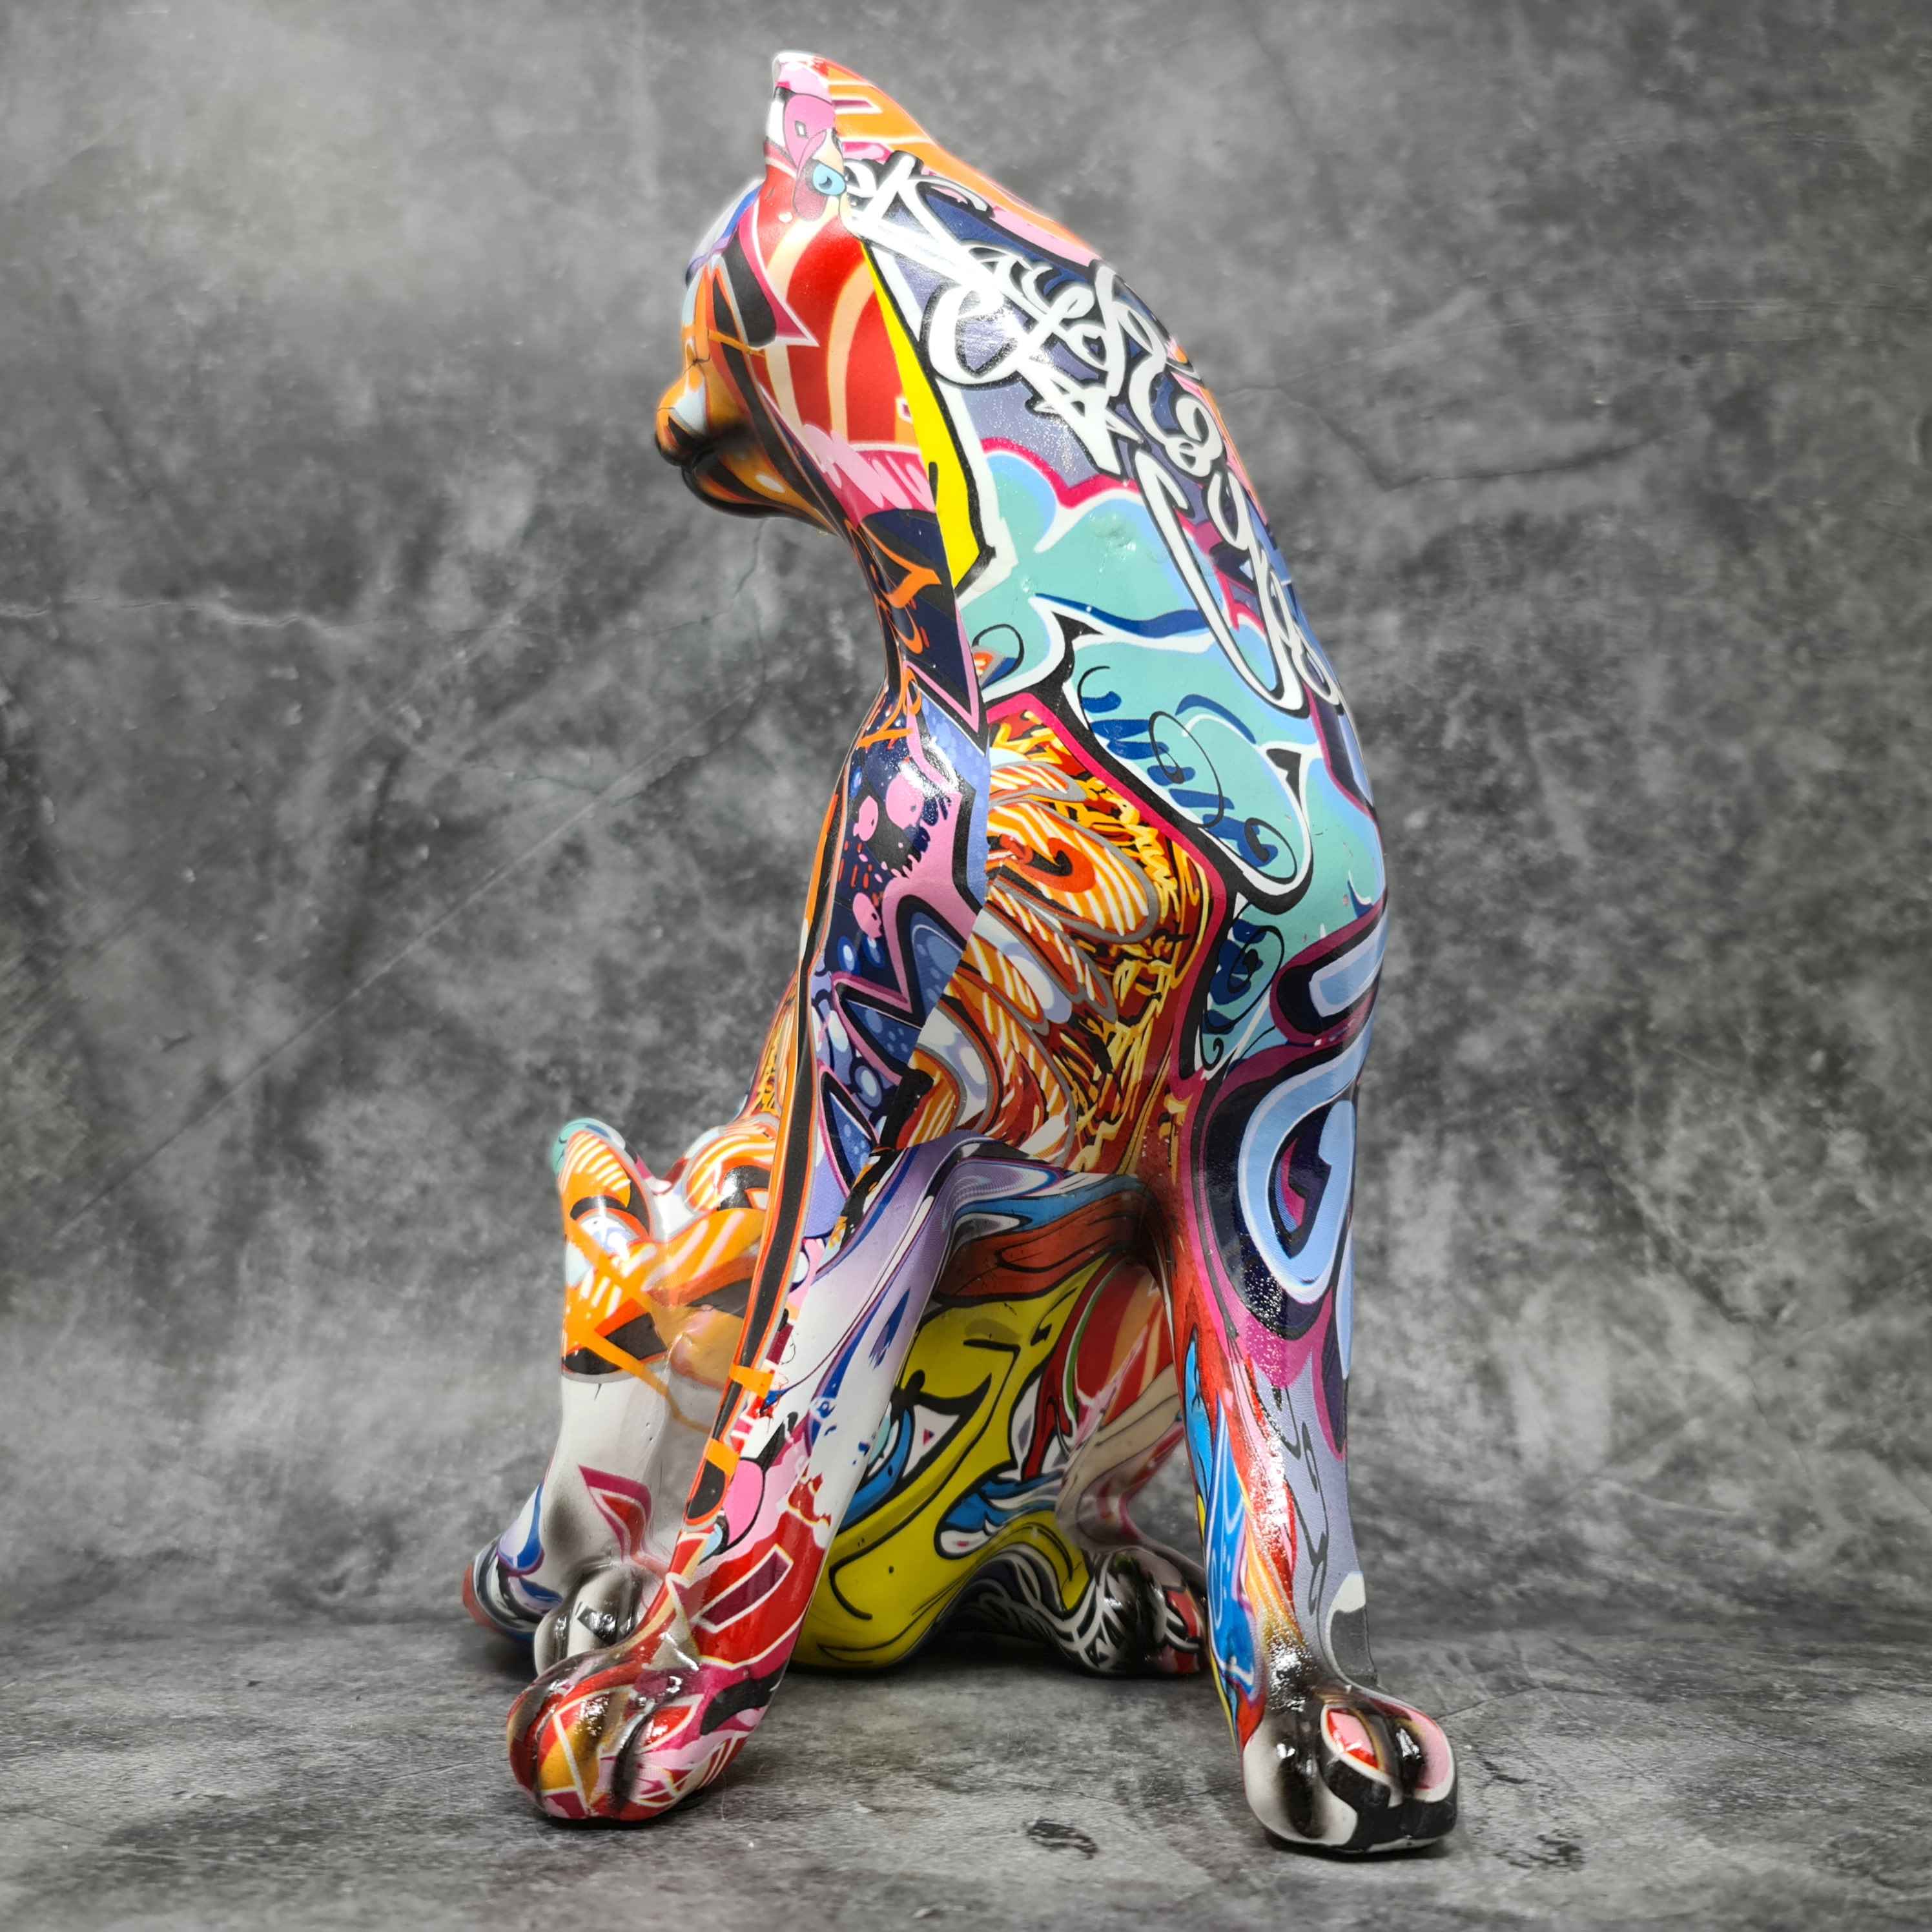 Skulptur - Katze POP ART, Mehrfarbig, 23x29 cm » Lifestyle & More